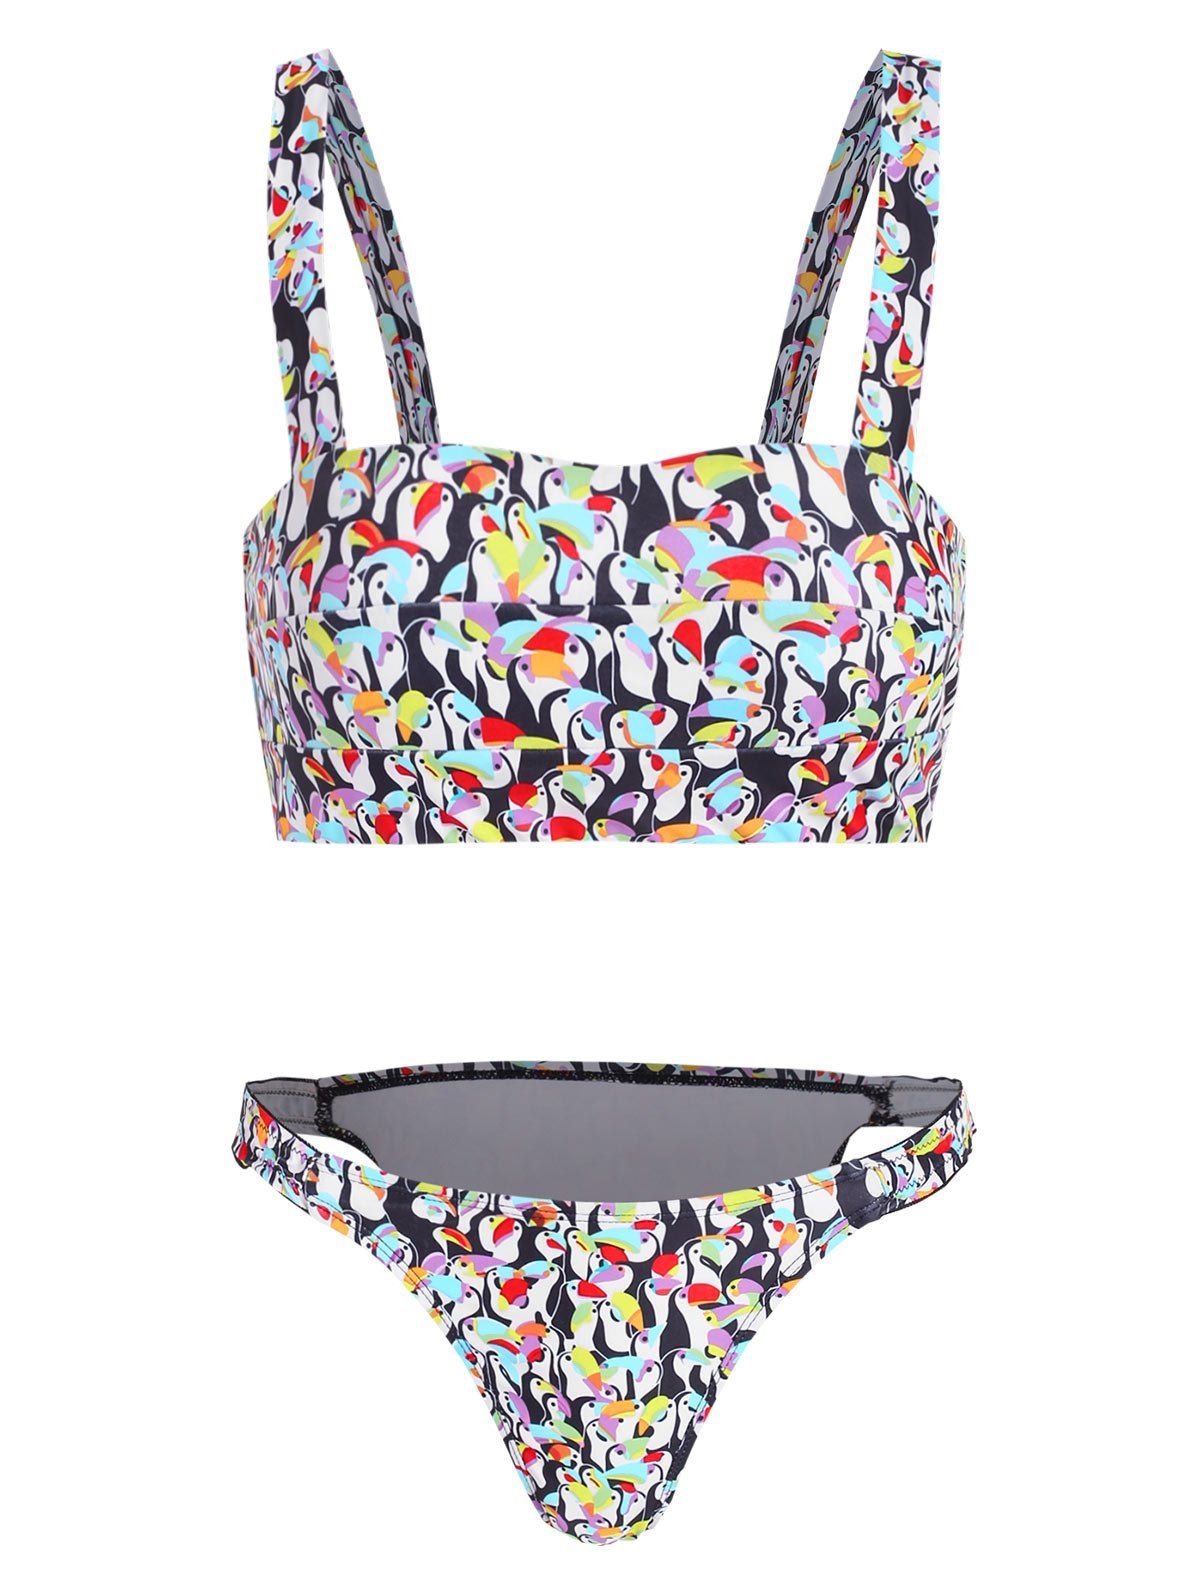 Penguin Print Bralette Bikini Set - COLORMIX XL